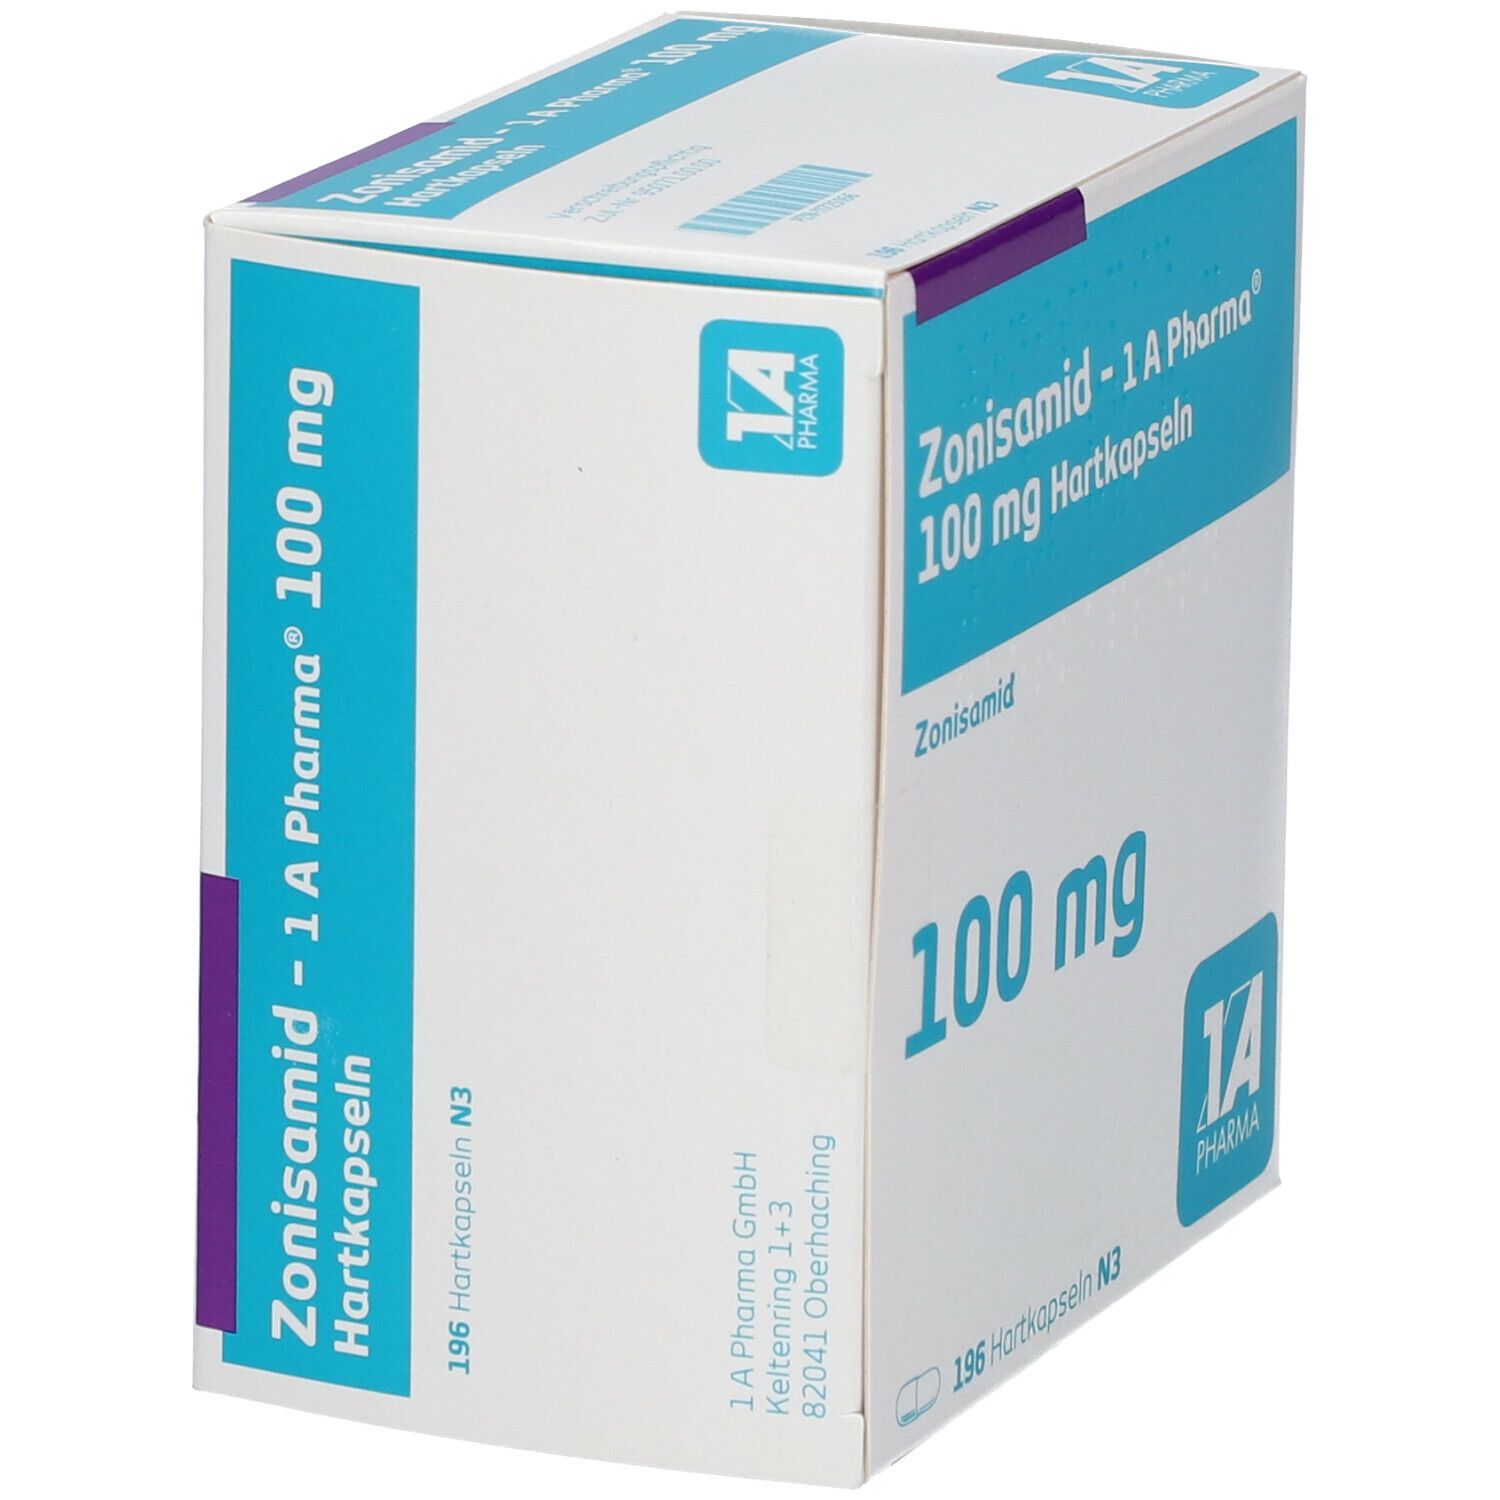 Zonisamid 1A Pharma® 100Mg